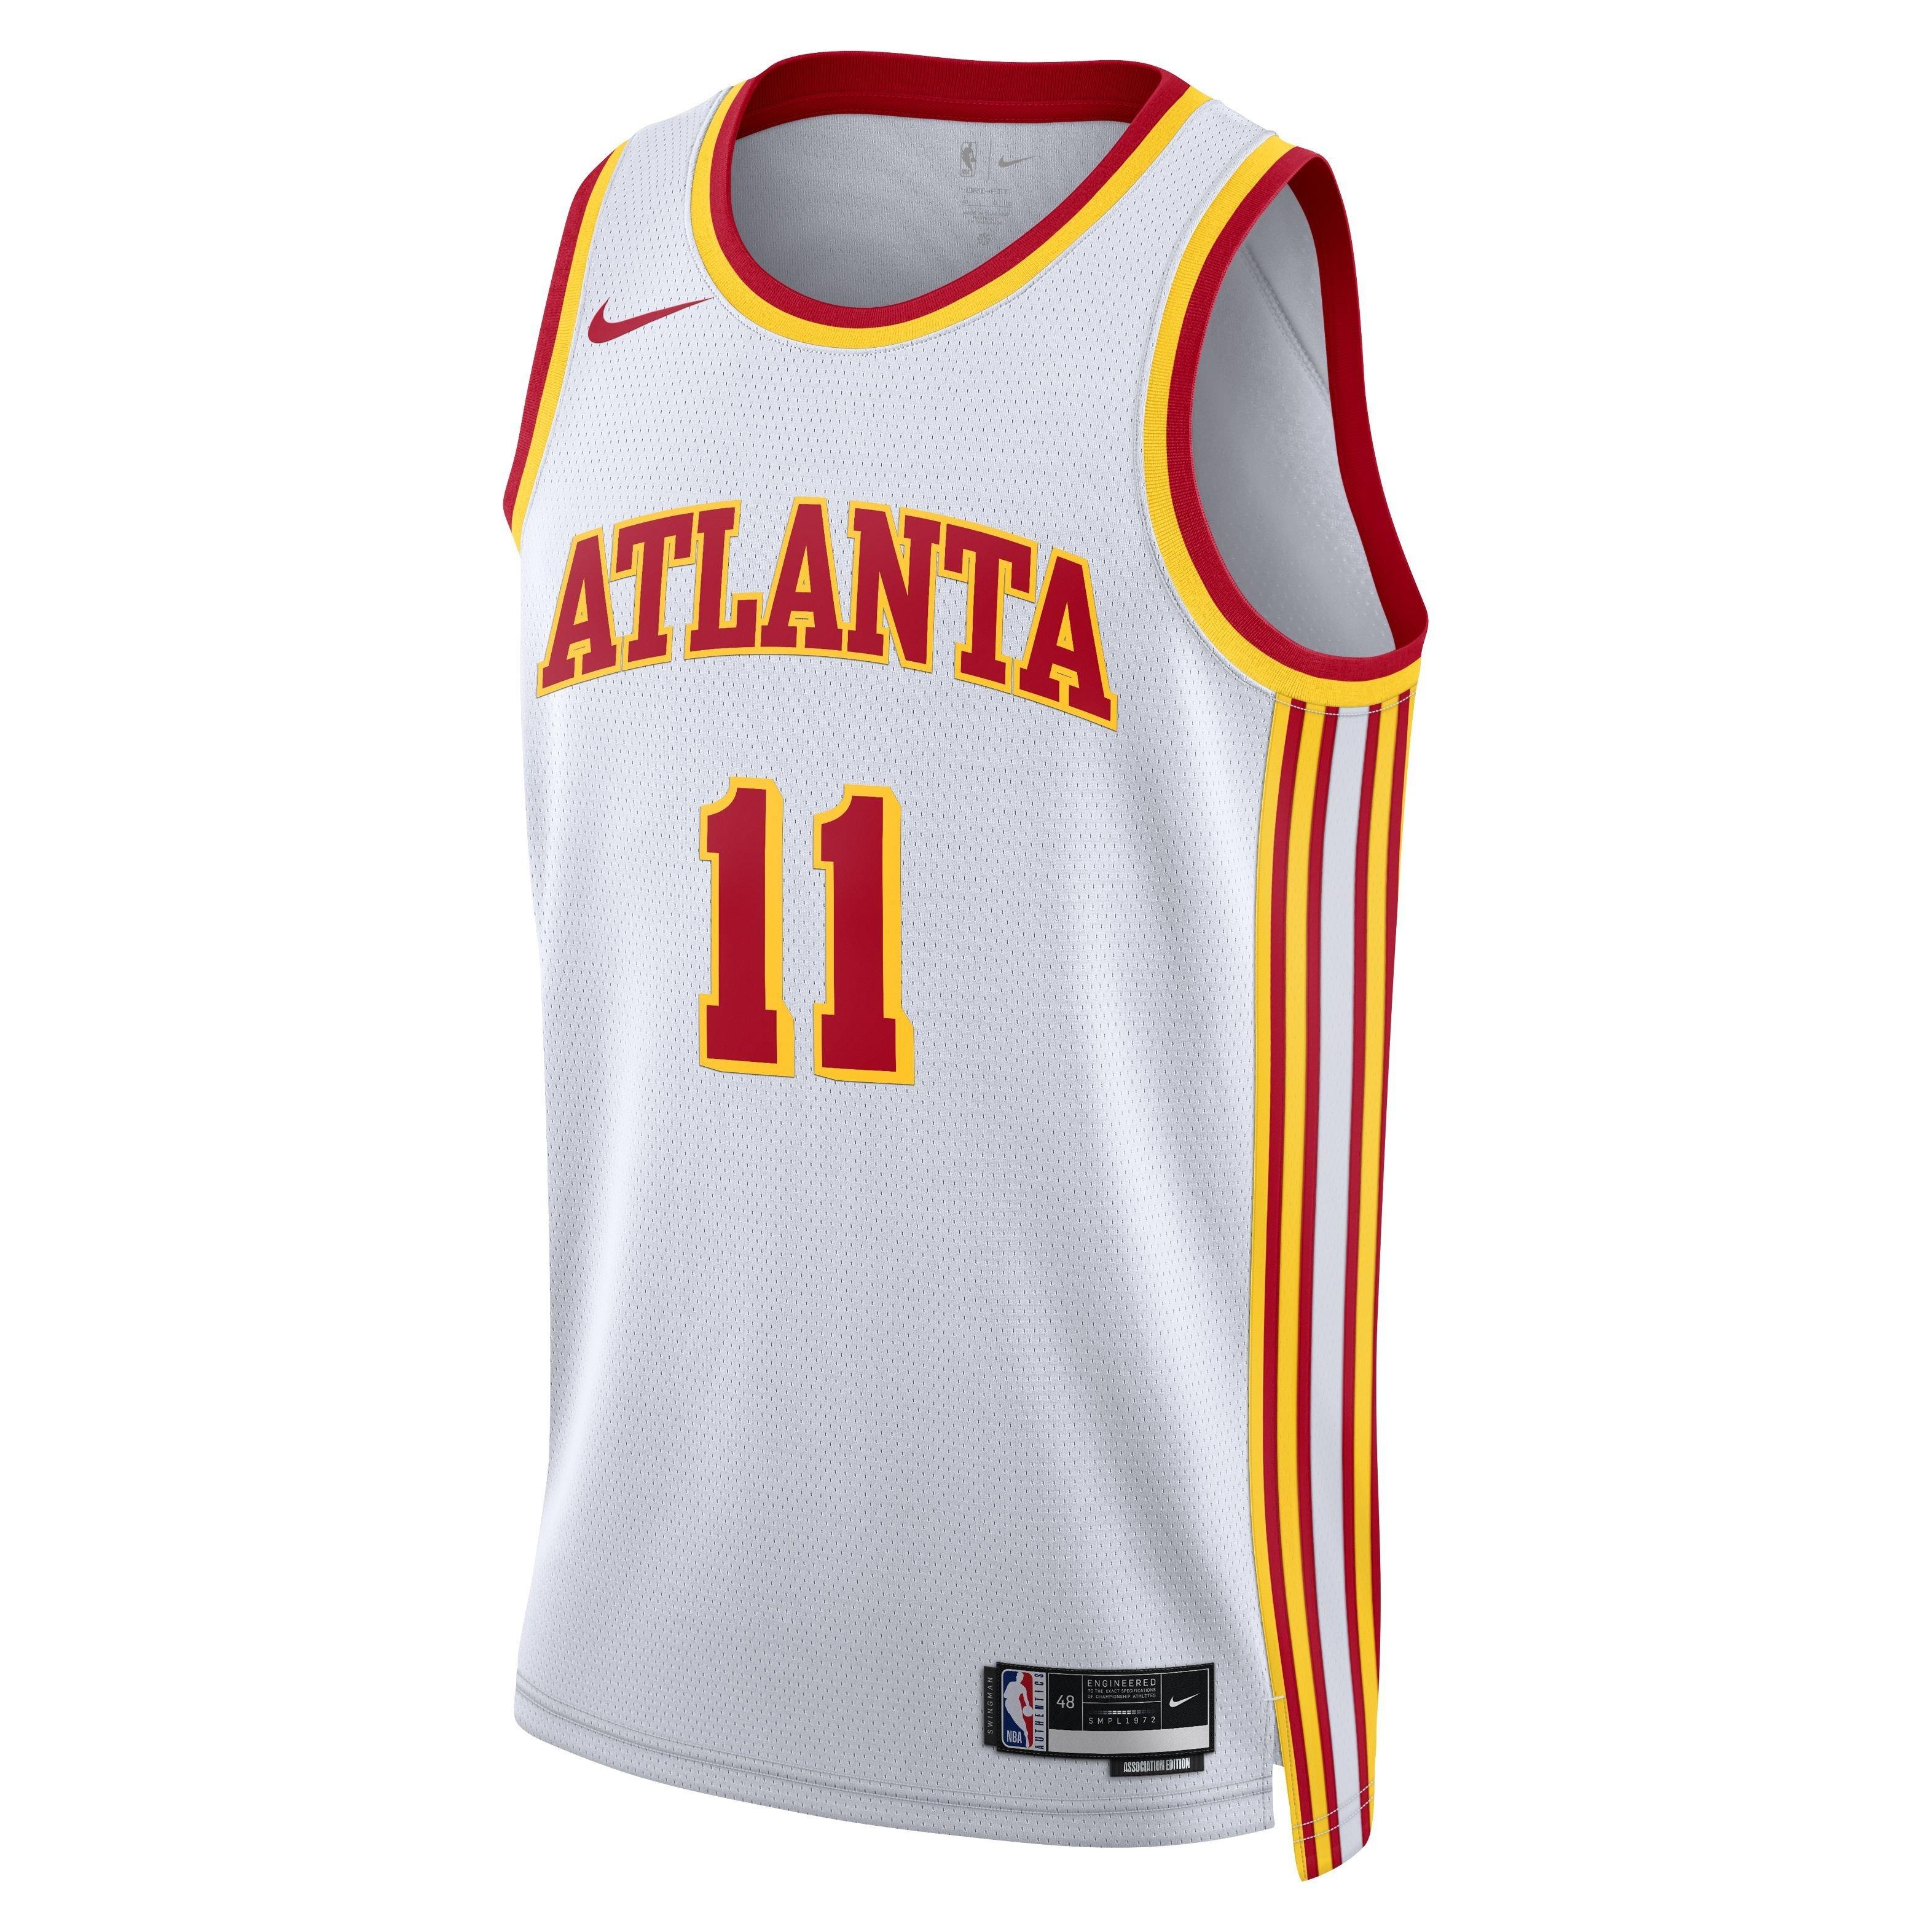 Atlanta Hawks City Edition Uniform: a team on the rise